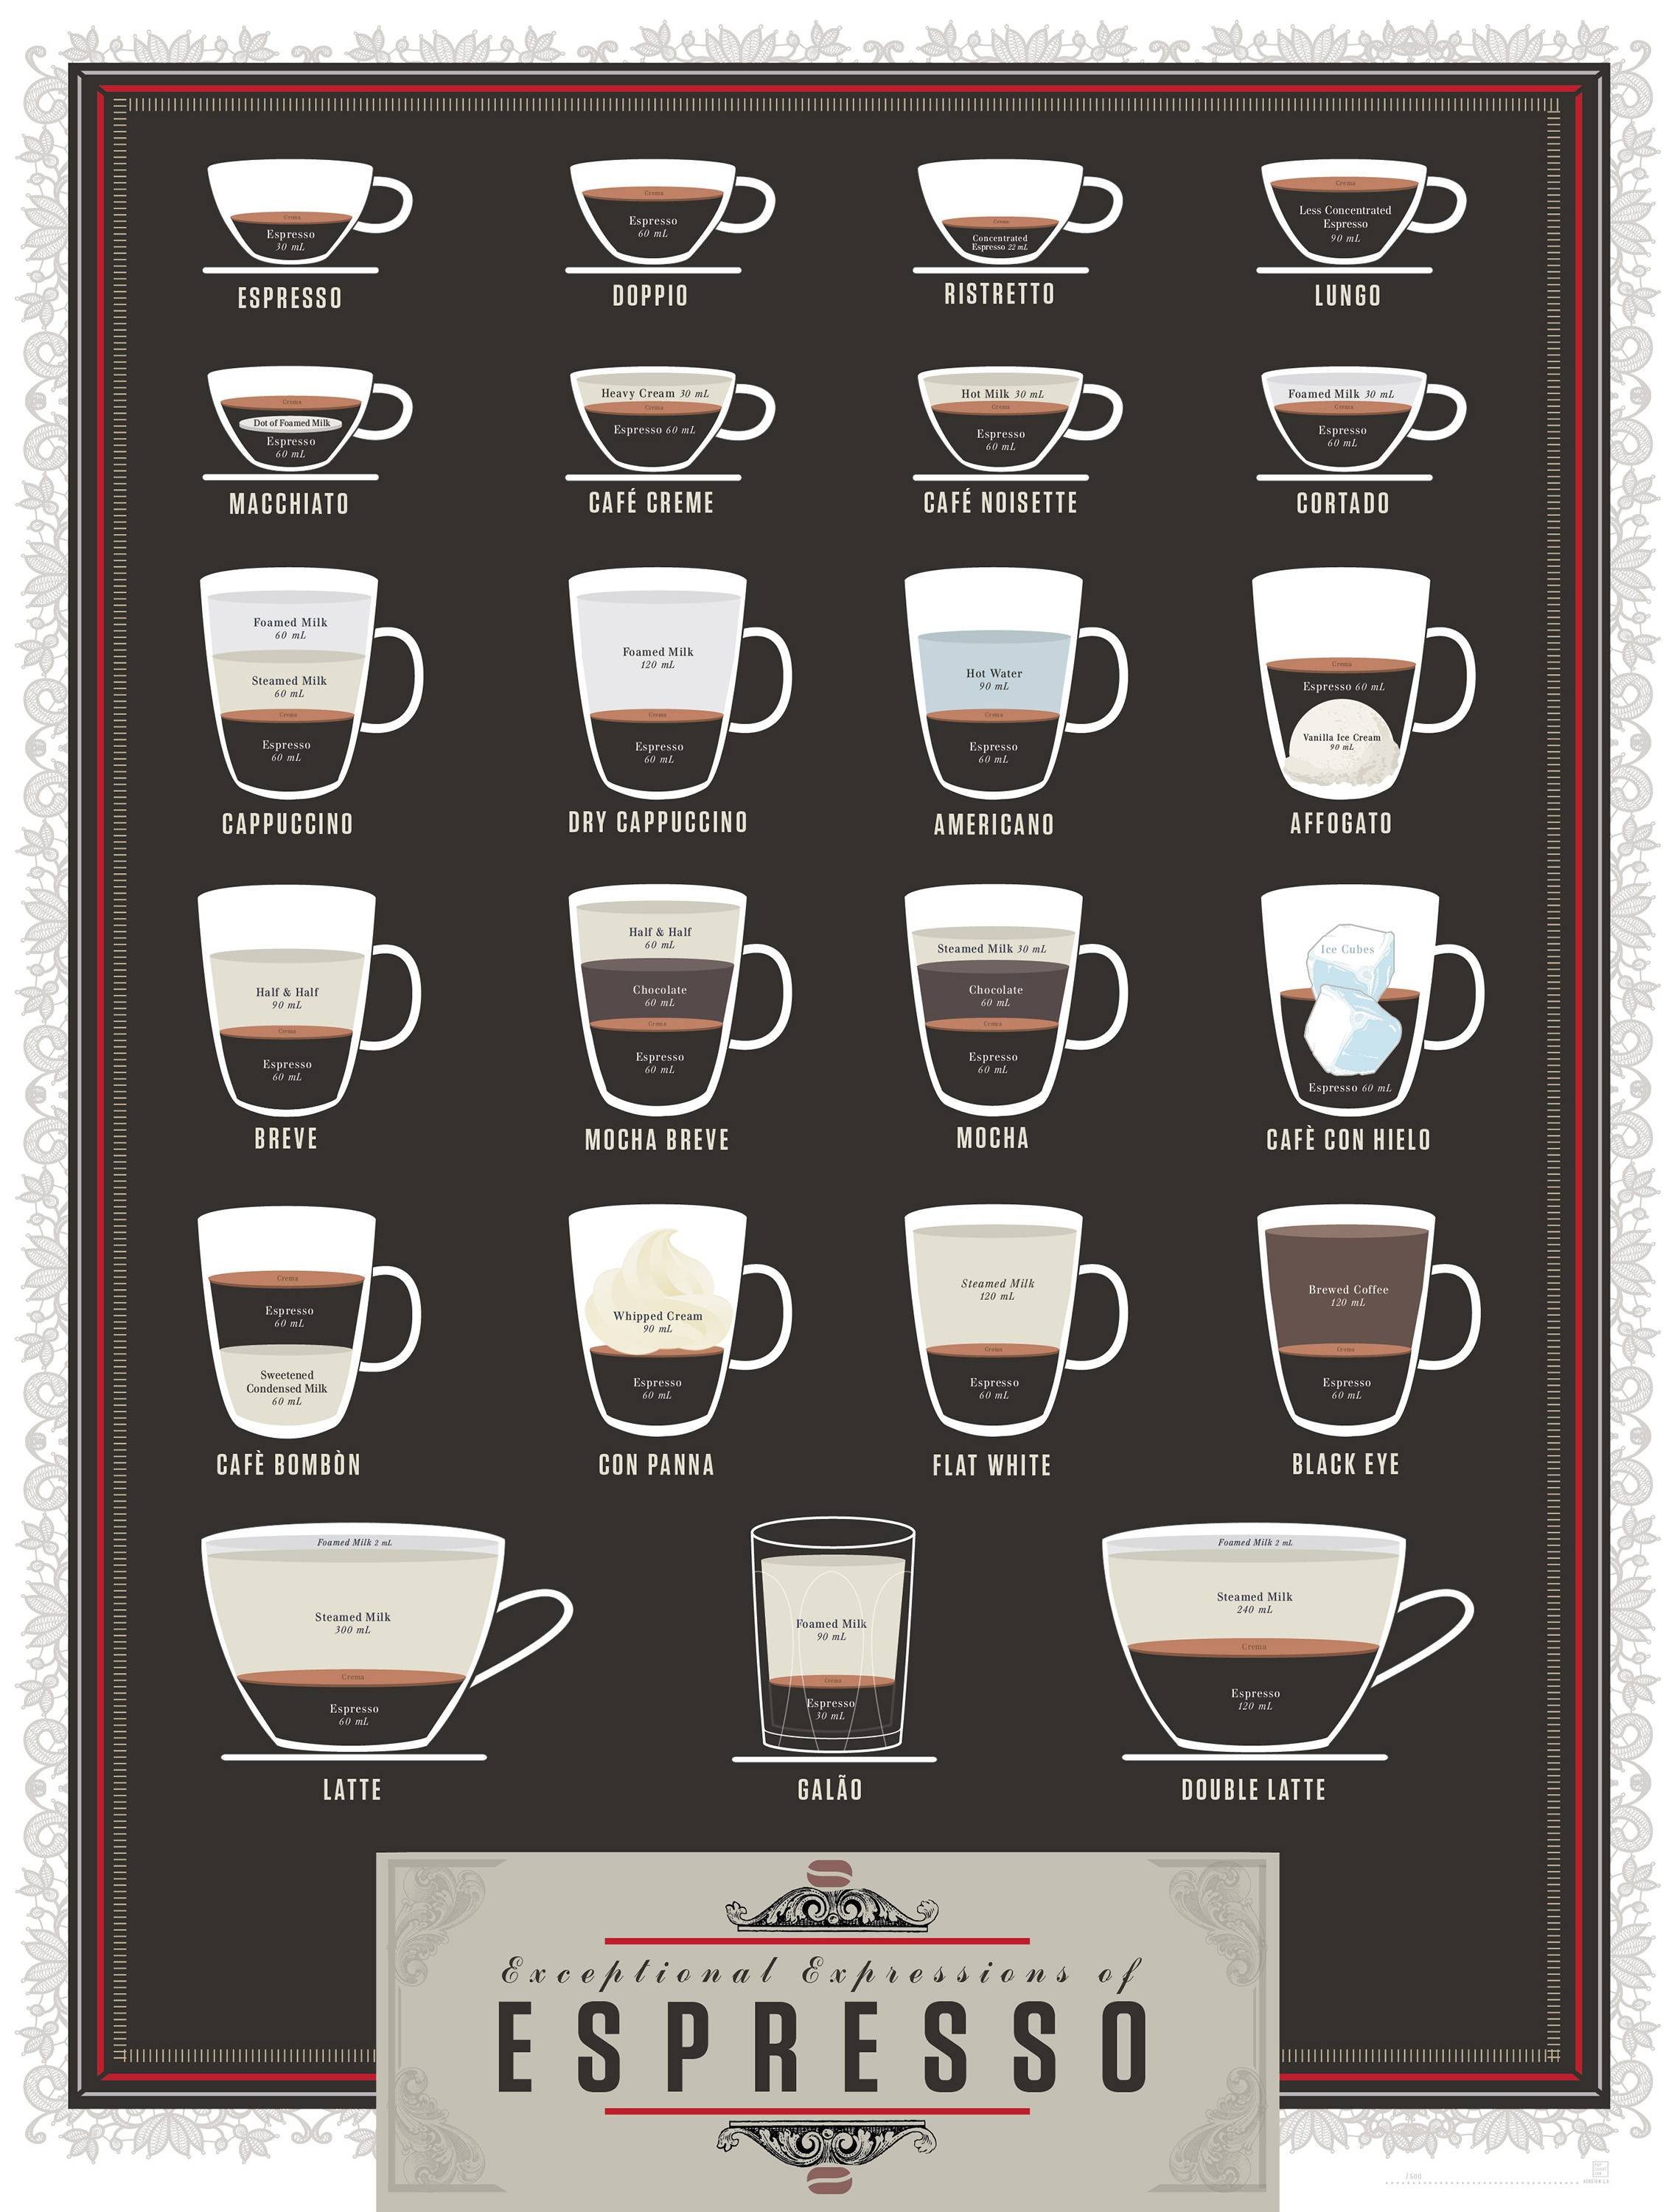 espresso based beverage chart